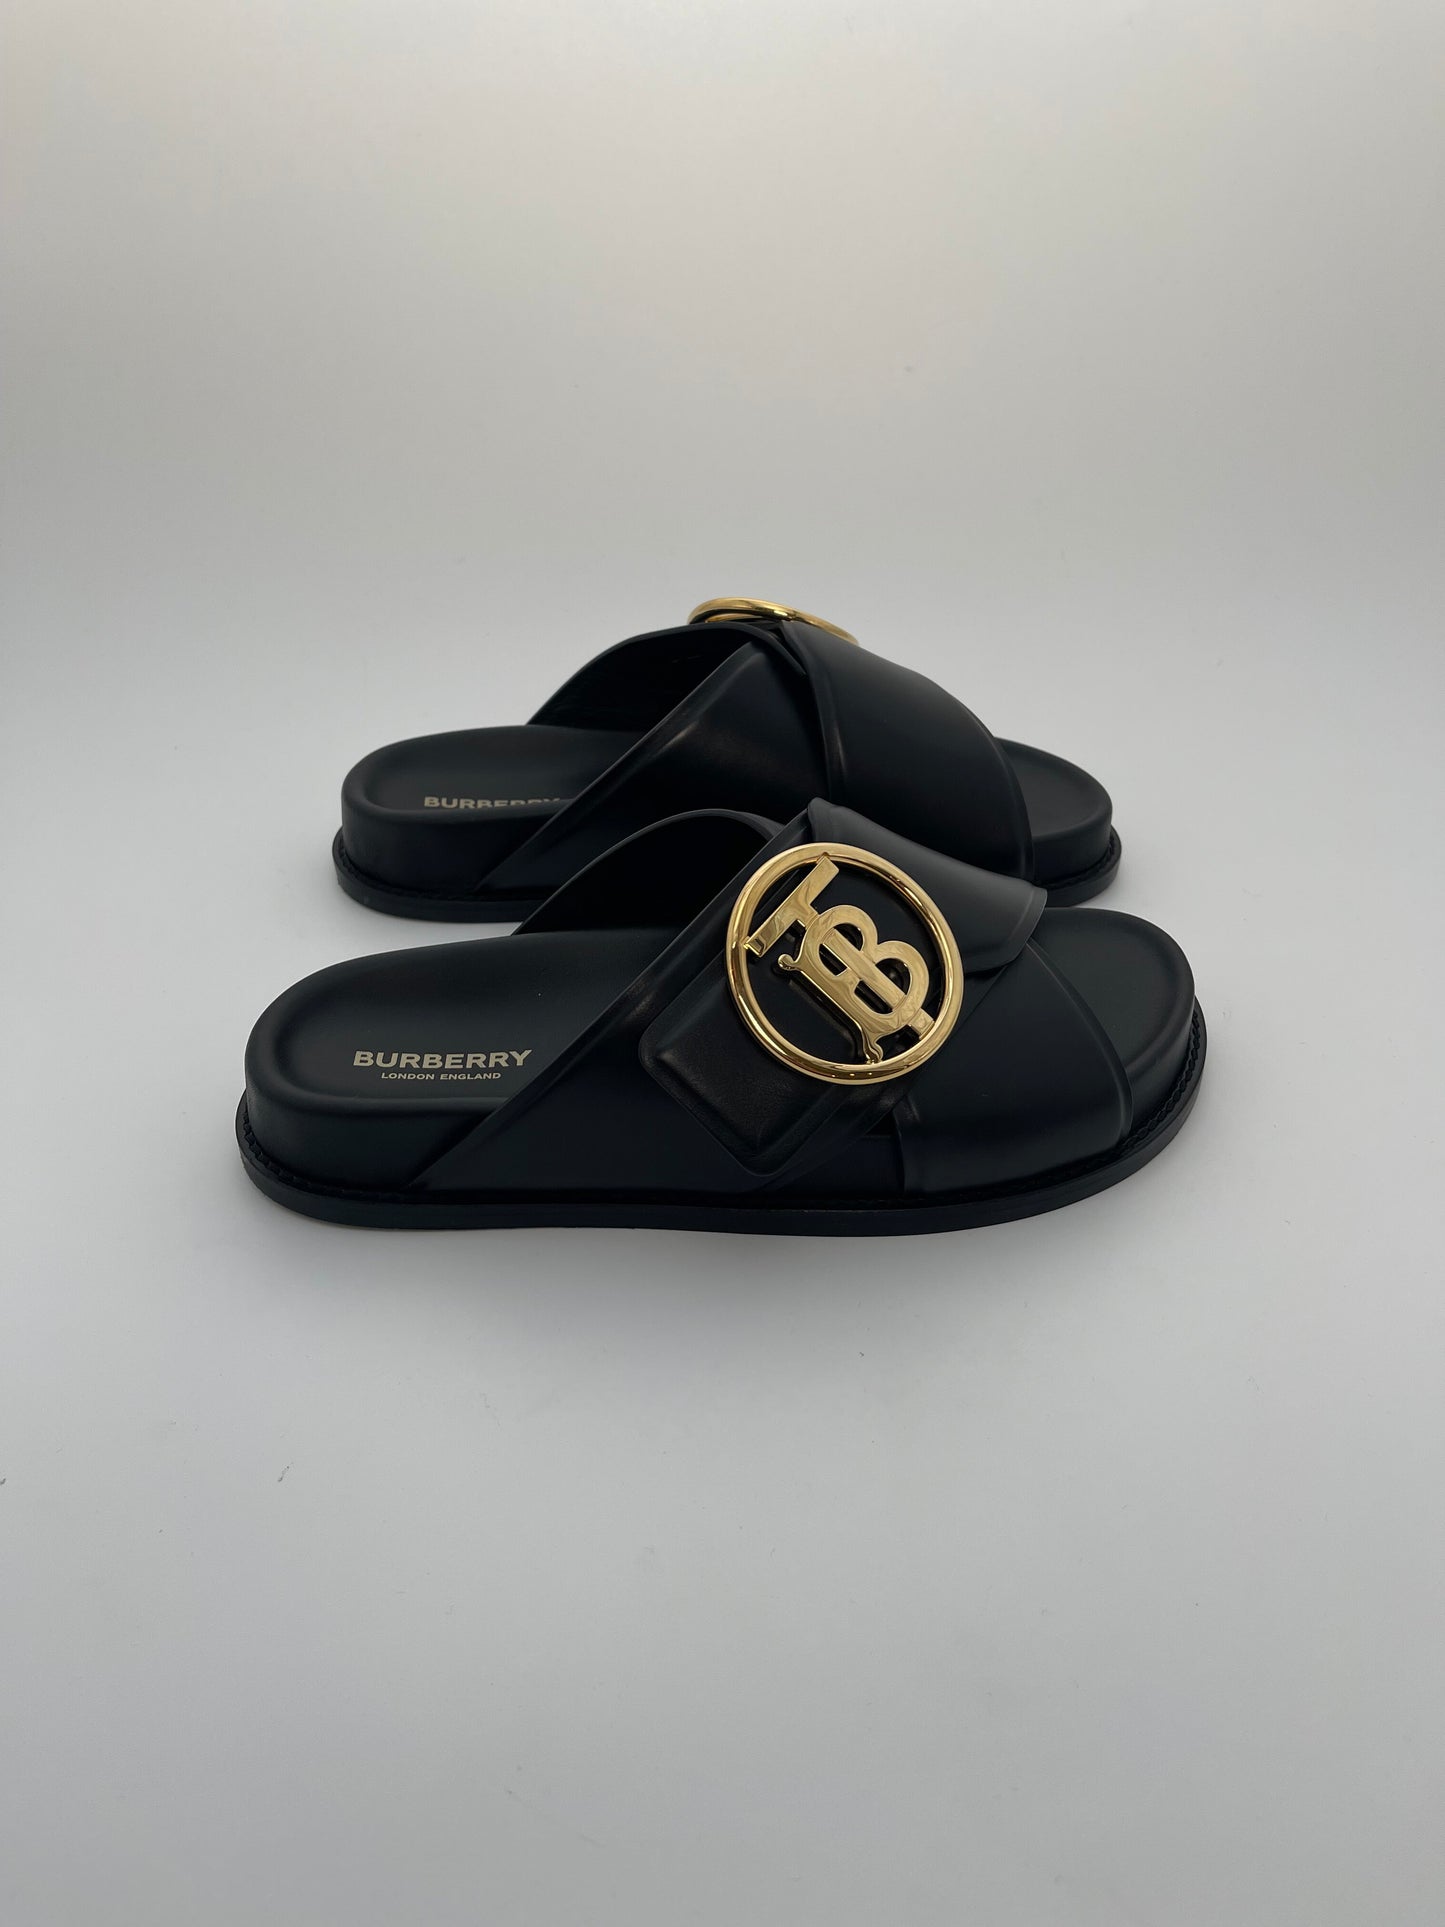 Burberry Black Monogram Slide Sandals Size 38